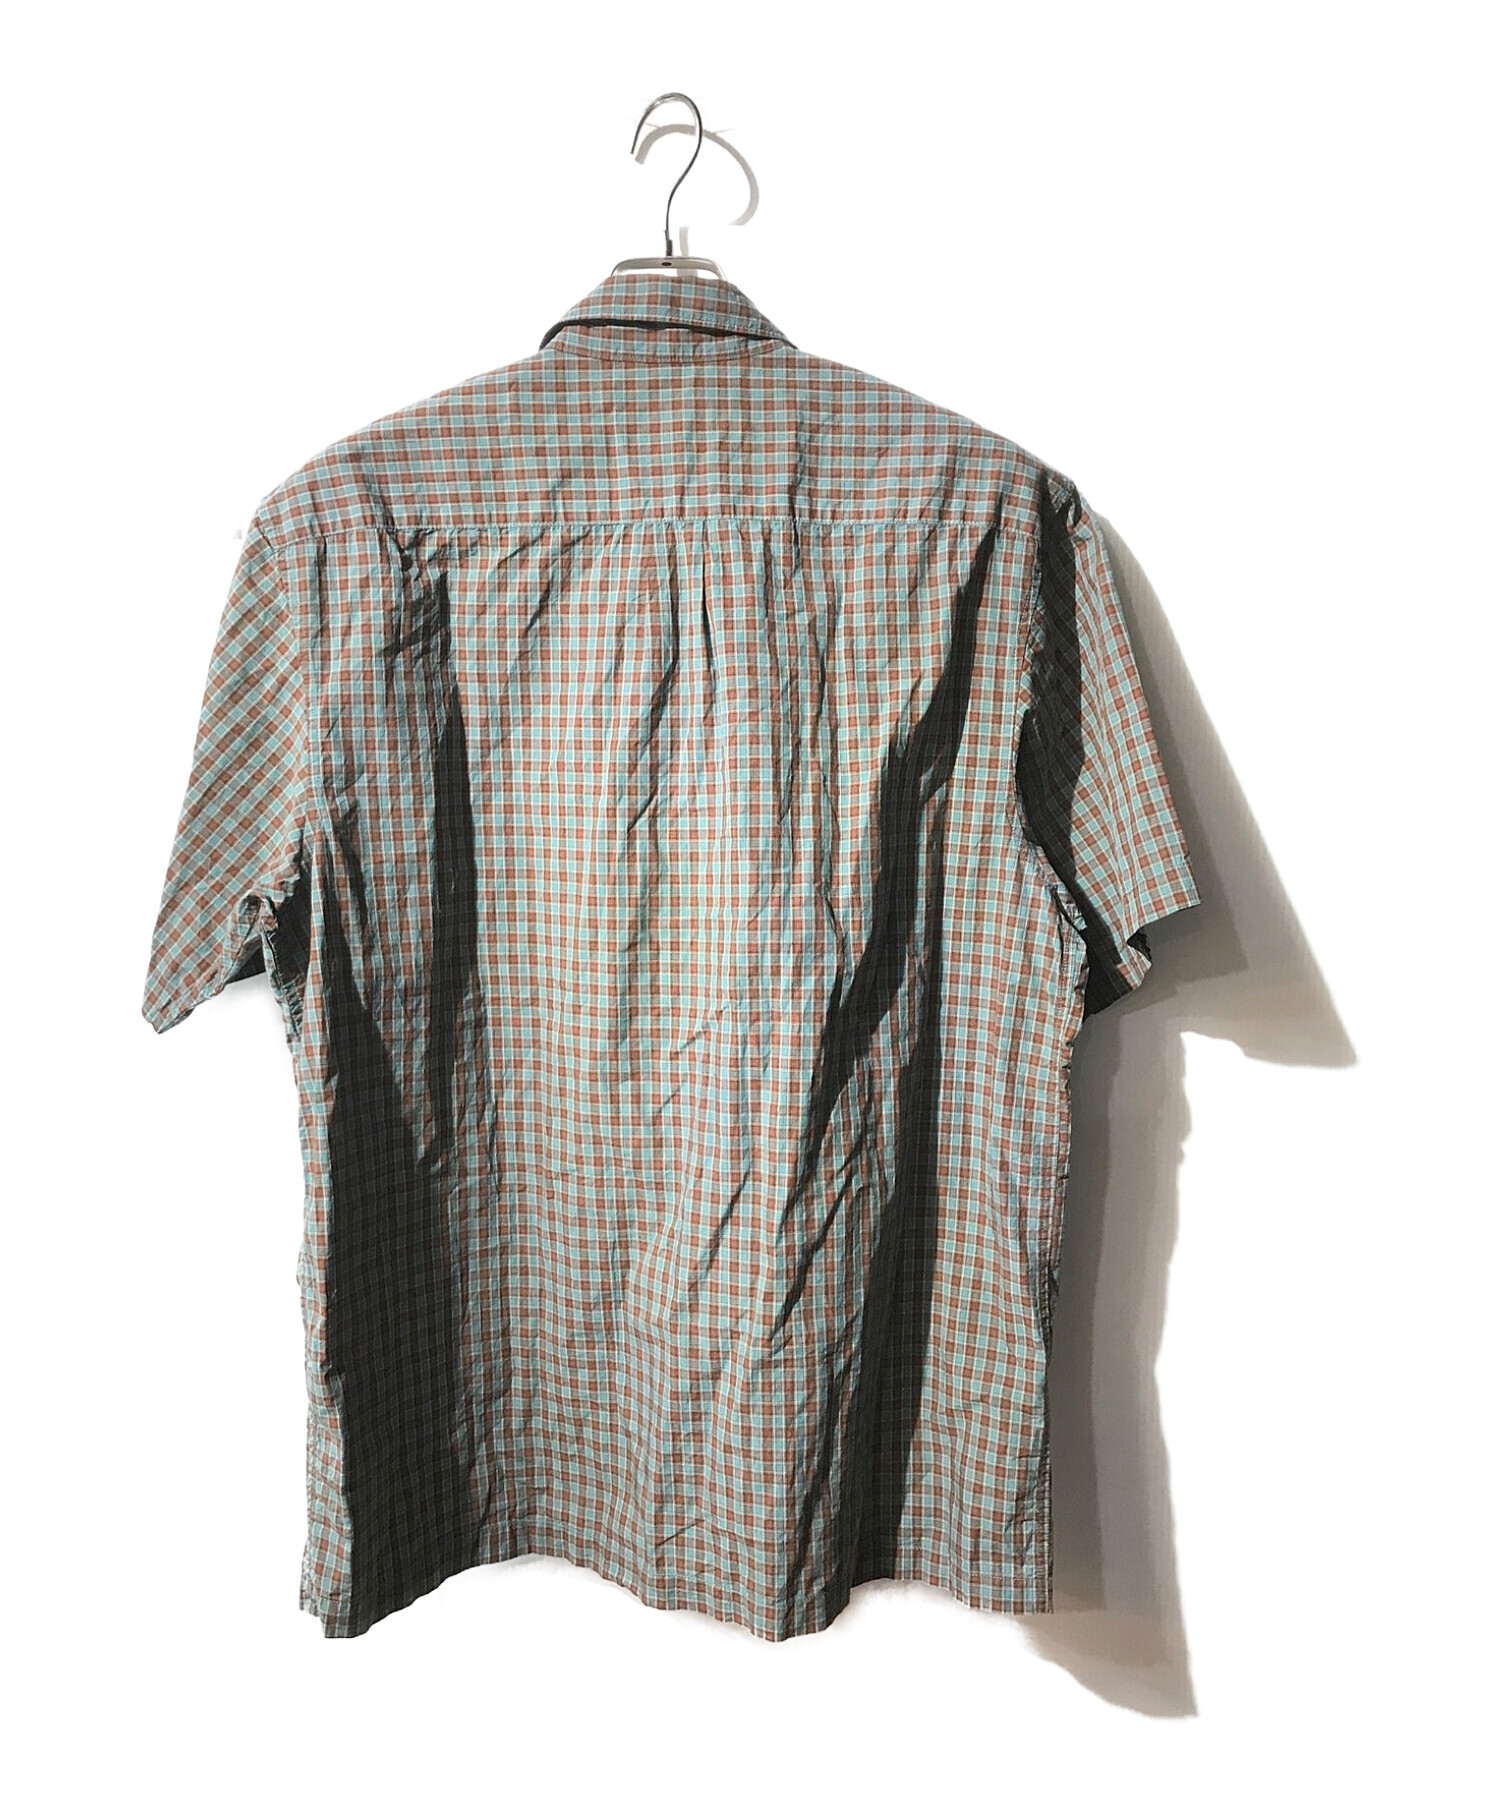 Supreme (シュプリーム) 19ss plaid s/s shirt ブラウン×グリーン サイズ:L